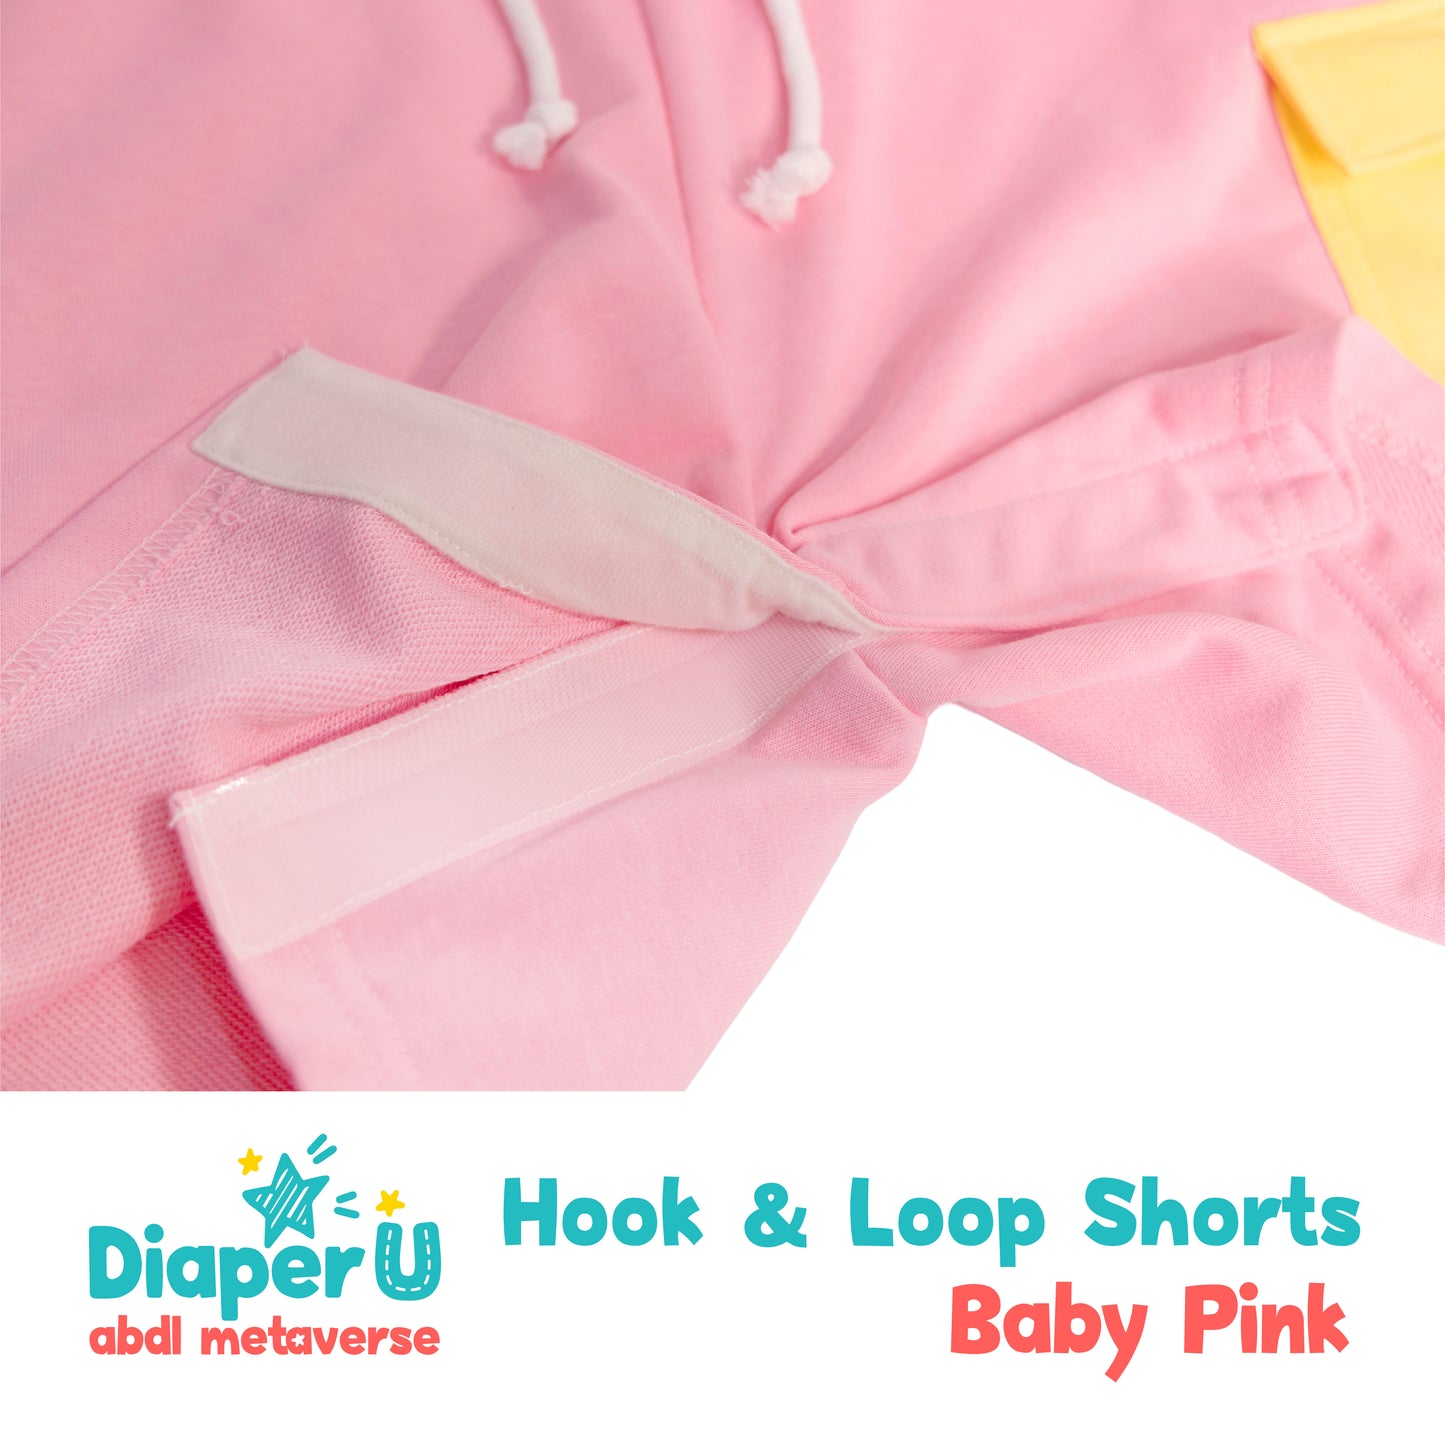 Hook & Loop Shorts - Baby Pink (Limited Edition)